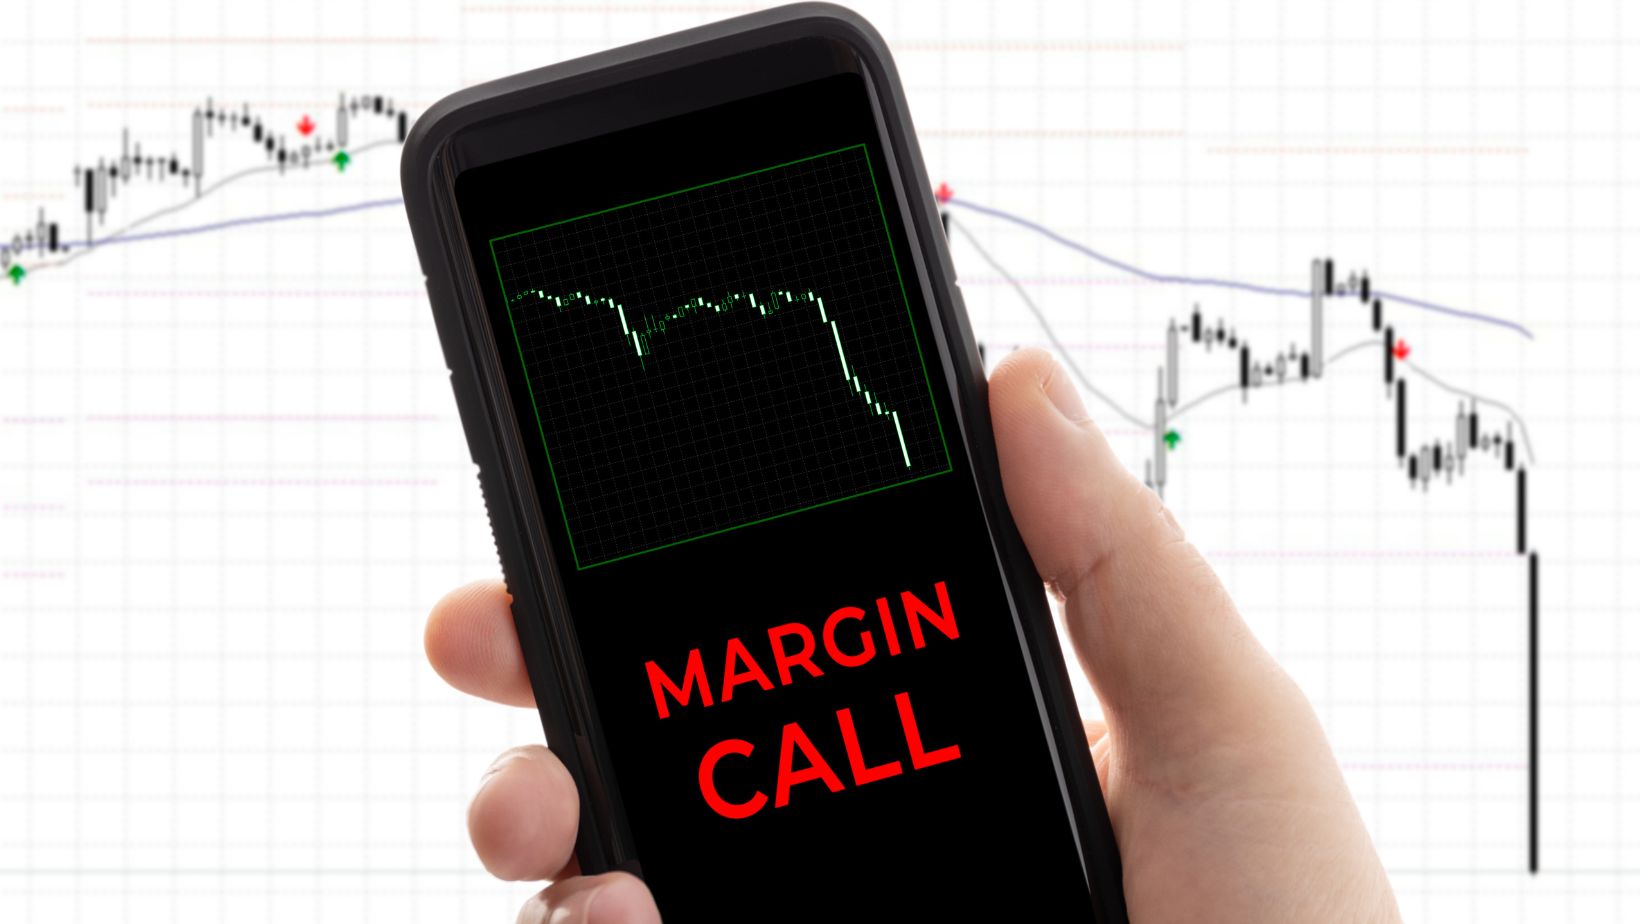 Margin call on the phone